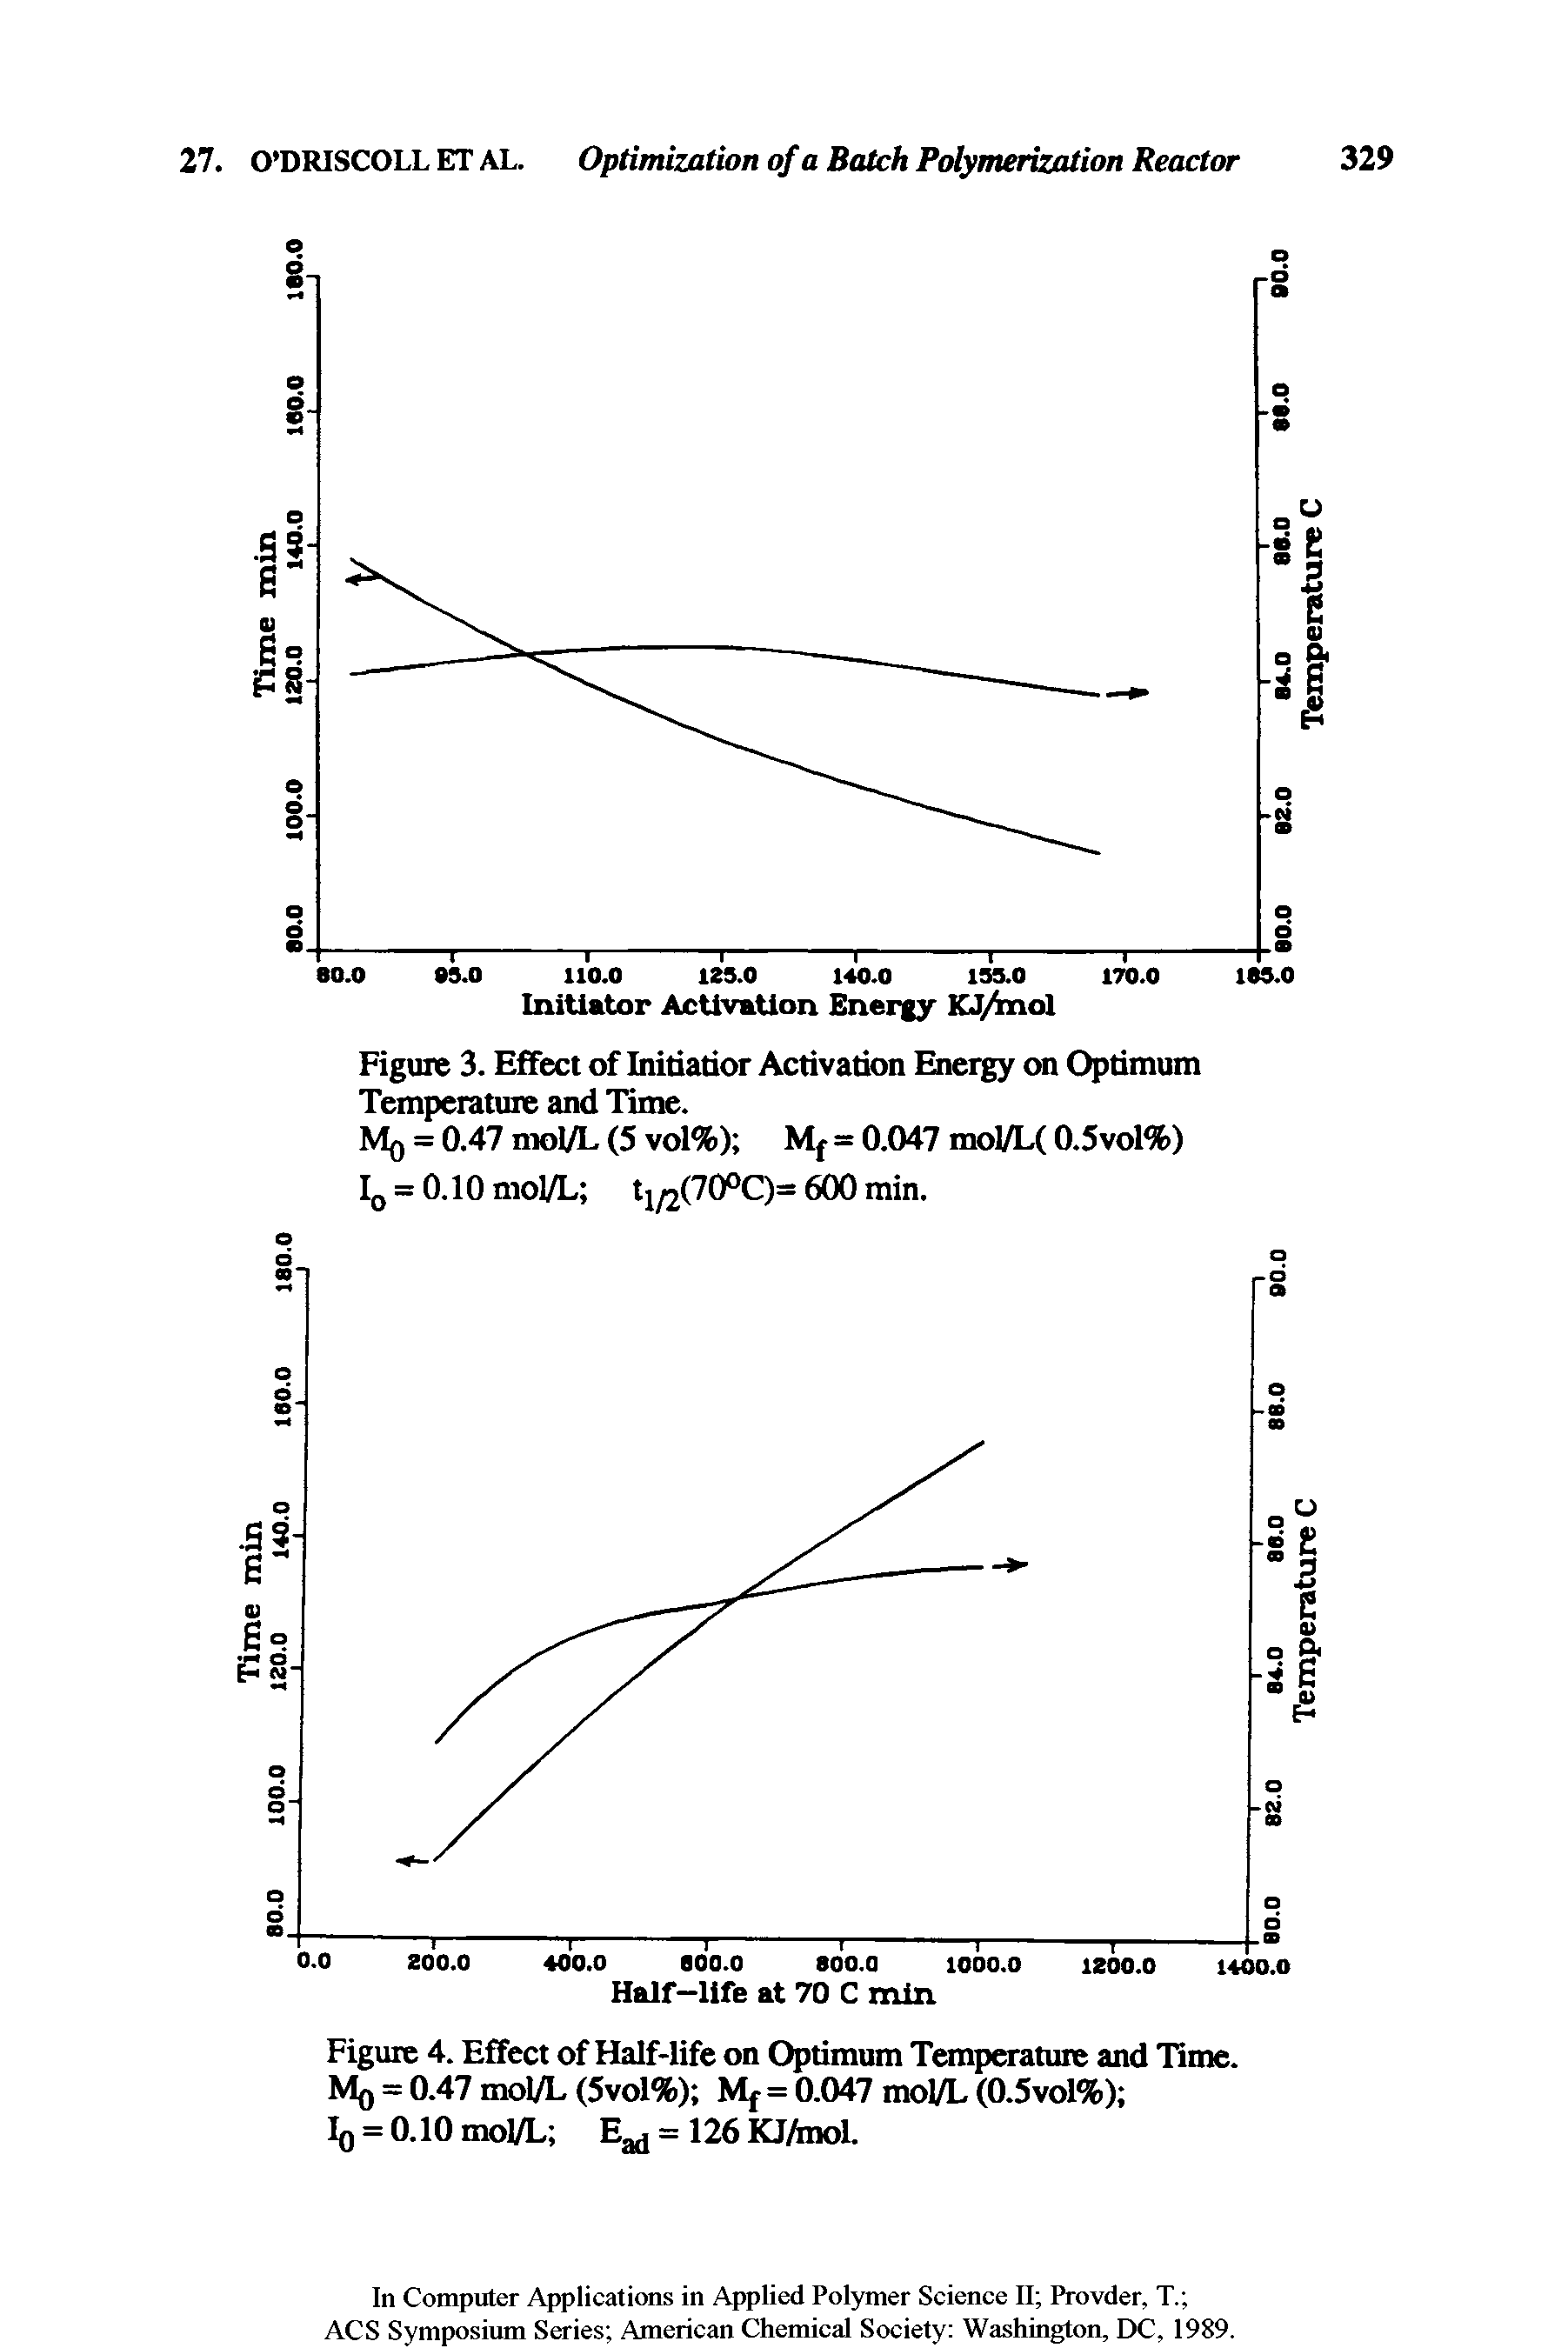 Figure 3. Effect of Initiatior Activation Energy on Optimum Temperature and Time.